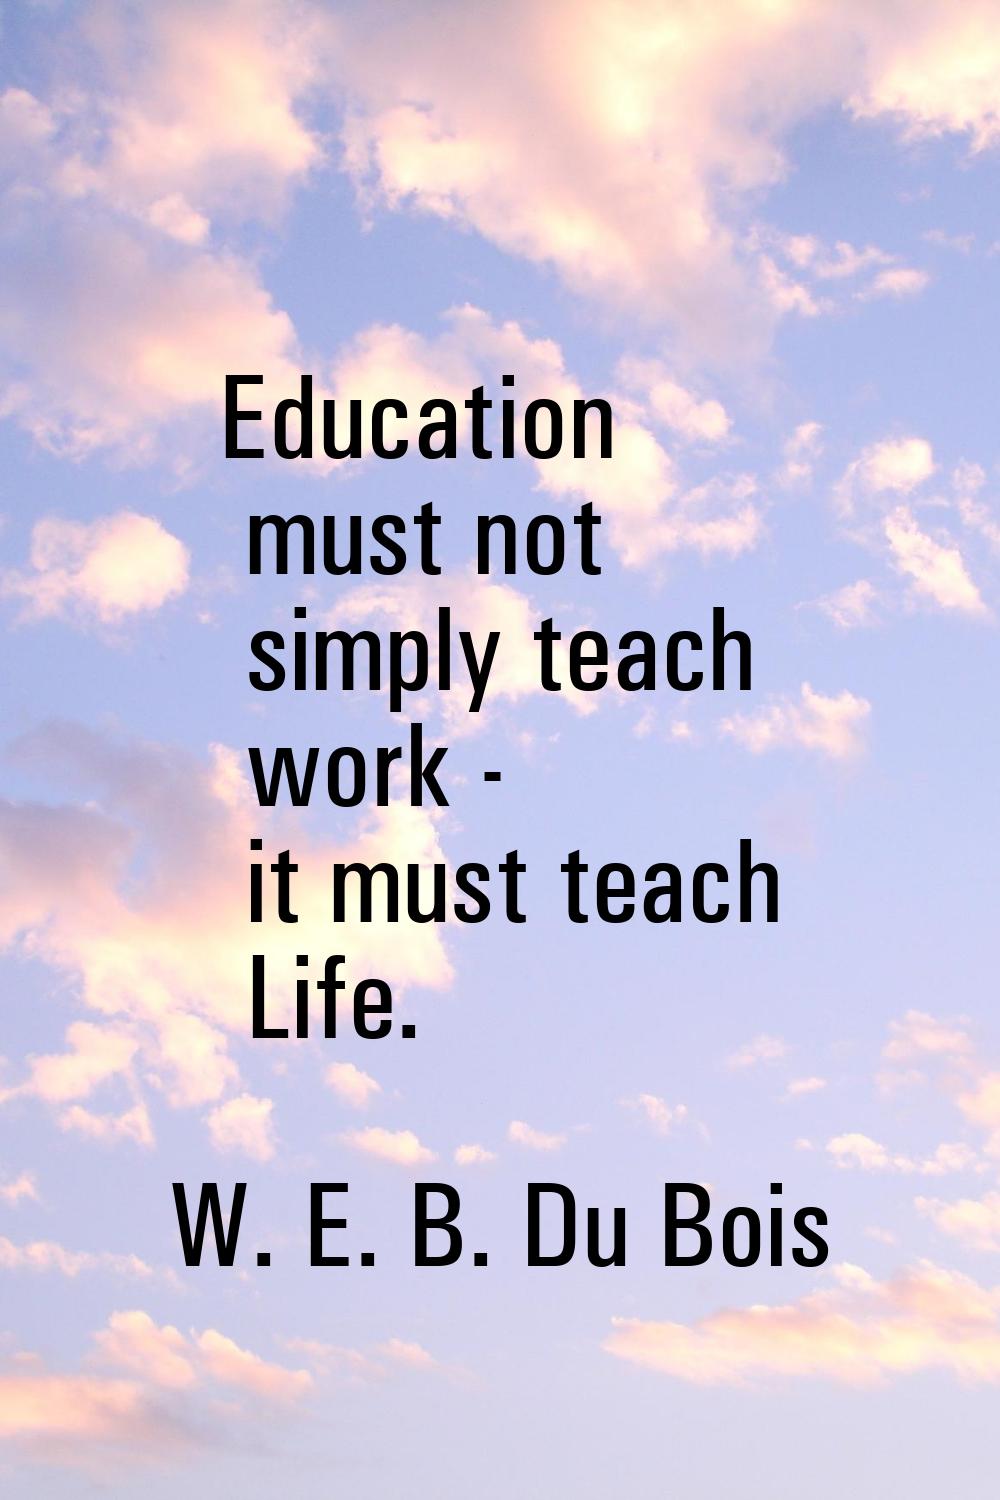 Education must not simply teach work - it must teach Life.